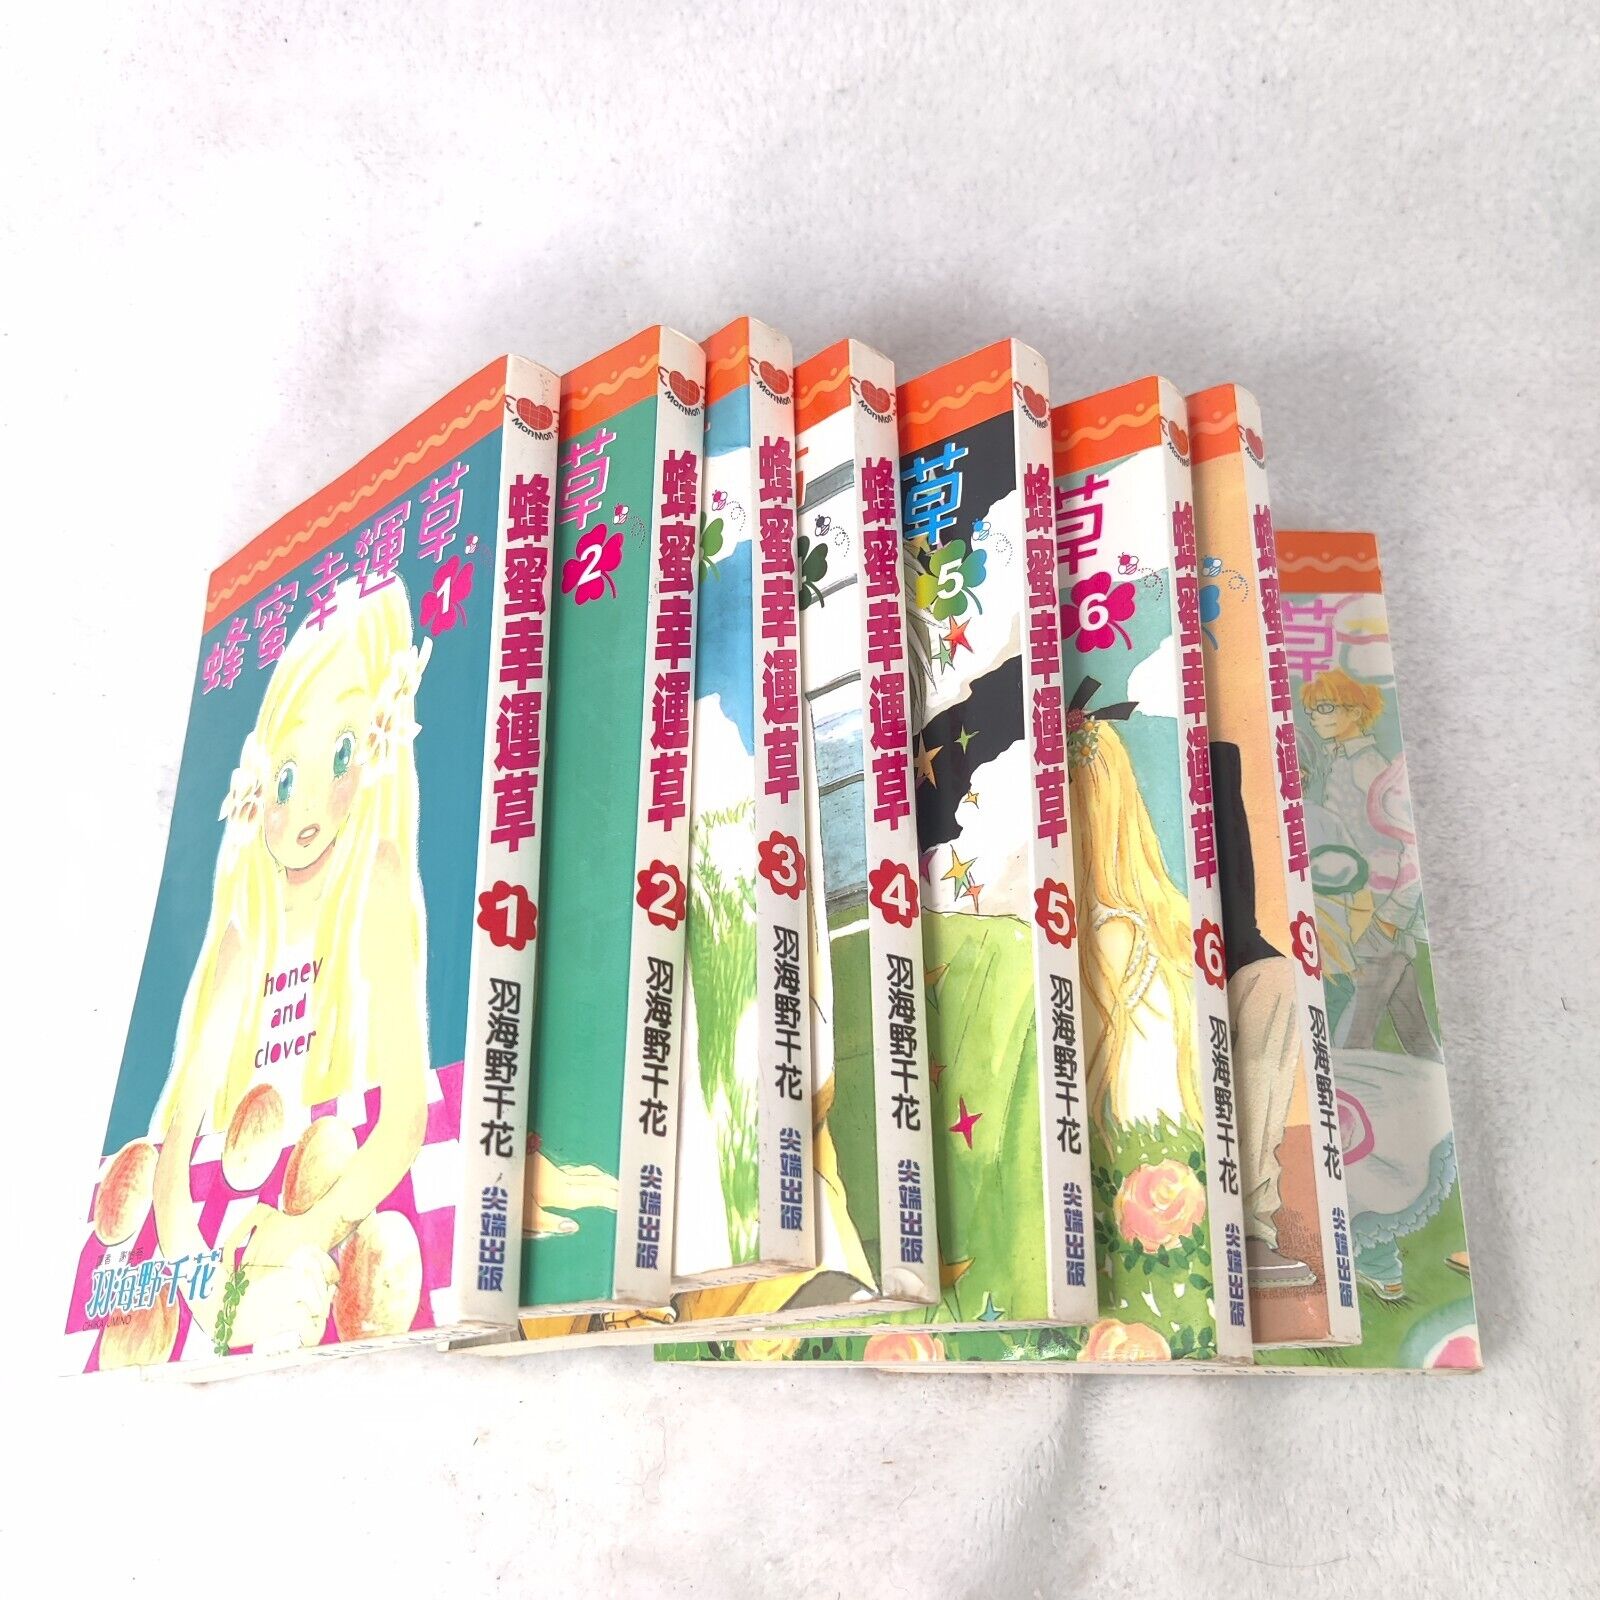 Honey and Clover Vol.1-6,9,10 Comics Set Japanese Manga Books